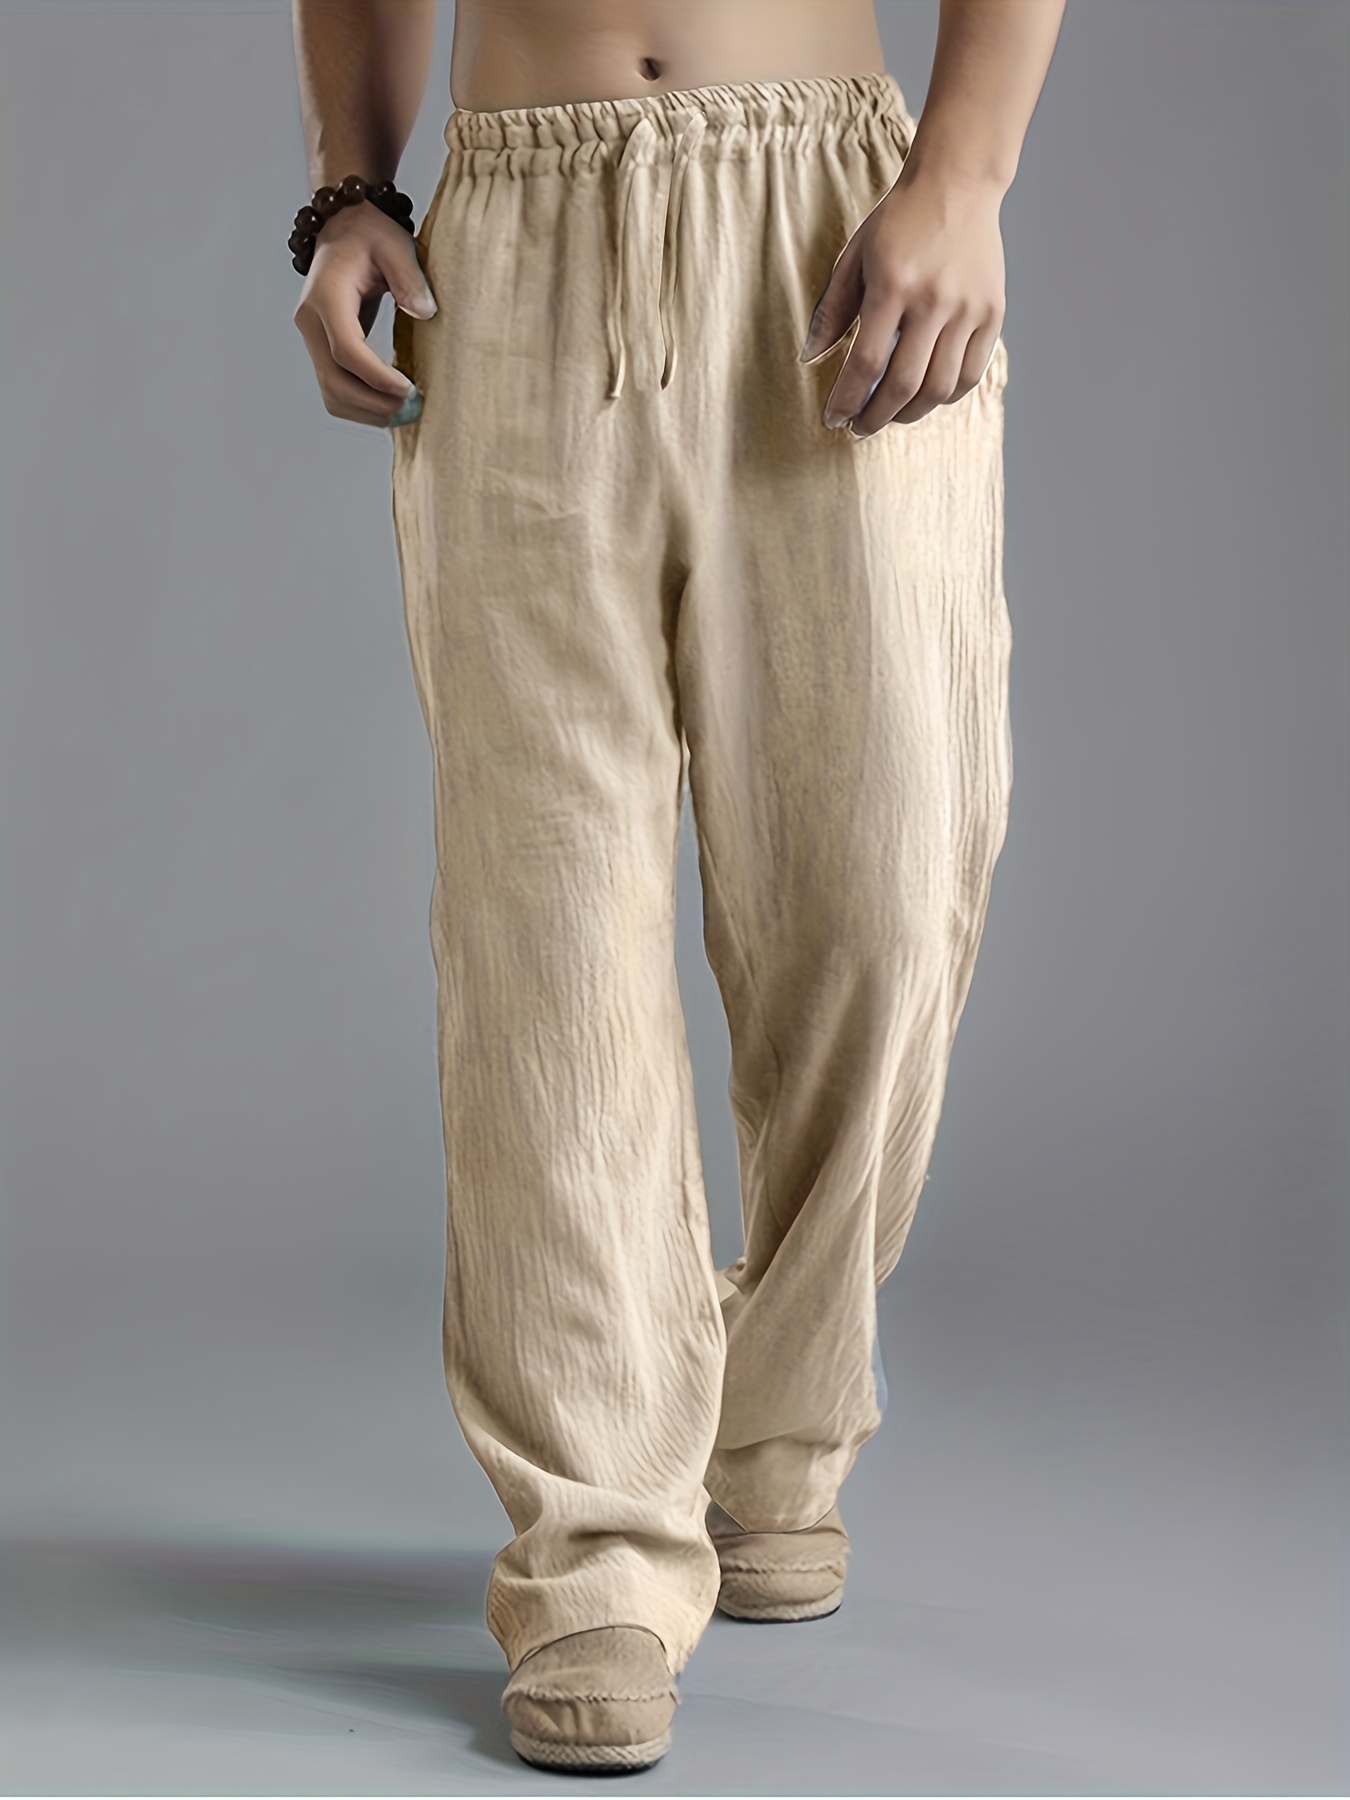 Spring New Arts Style Women Harem Pants Elastic Waist Plaid cotton linen  Vintage Pants -MAWHP001A